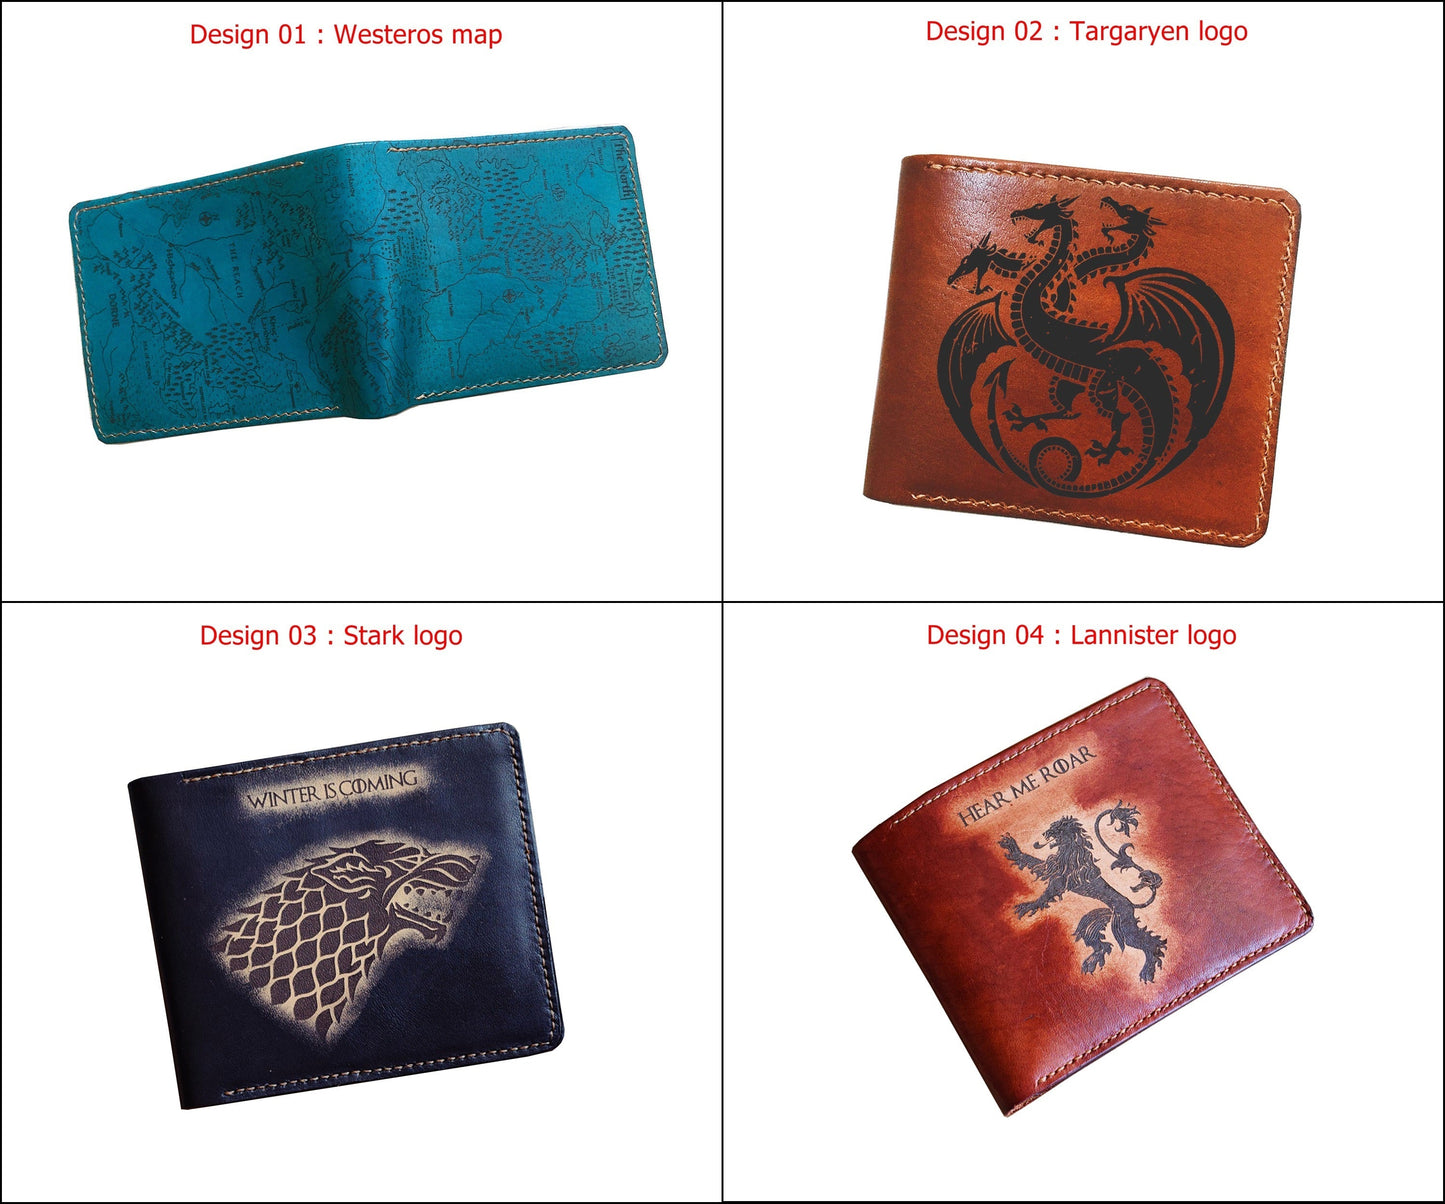 Mayan Corner - Game of Thrones leather men's wallet, men's gift ideas, personalized gift for him, anniversary present - House Targaryen Logo